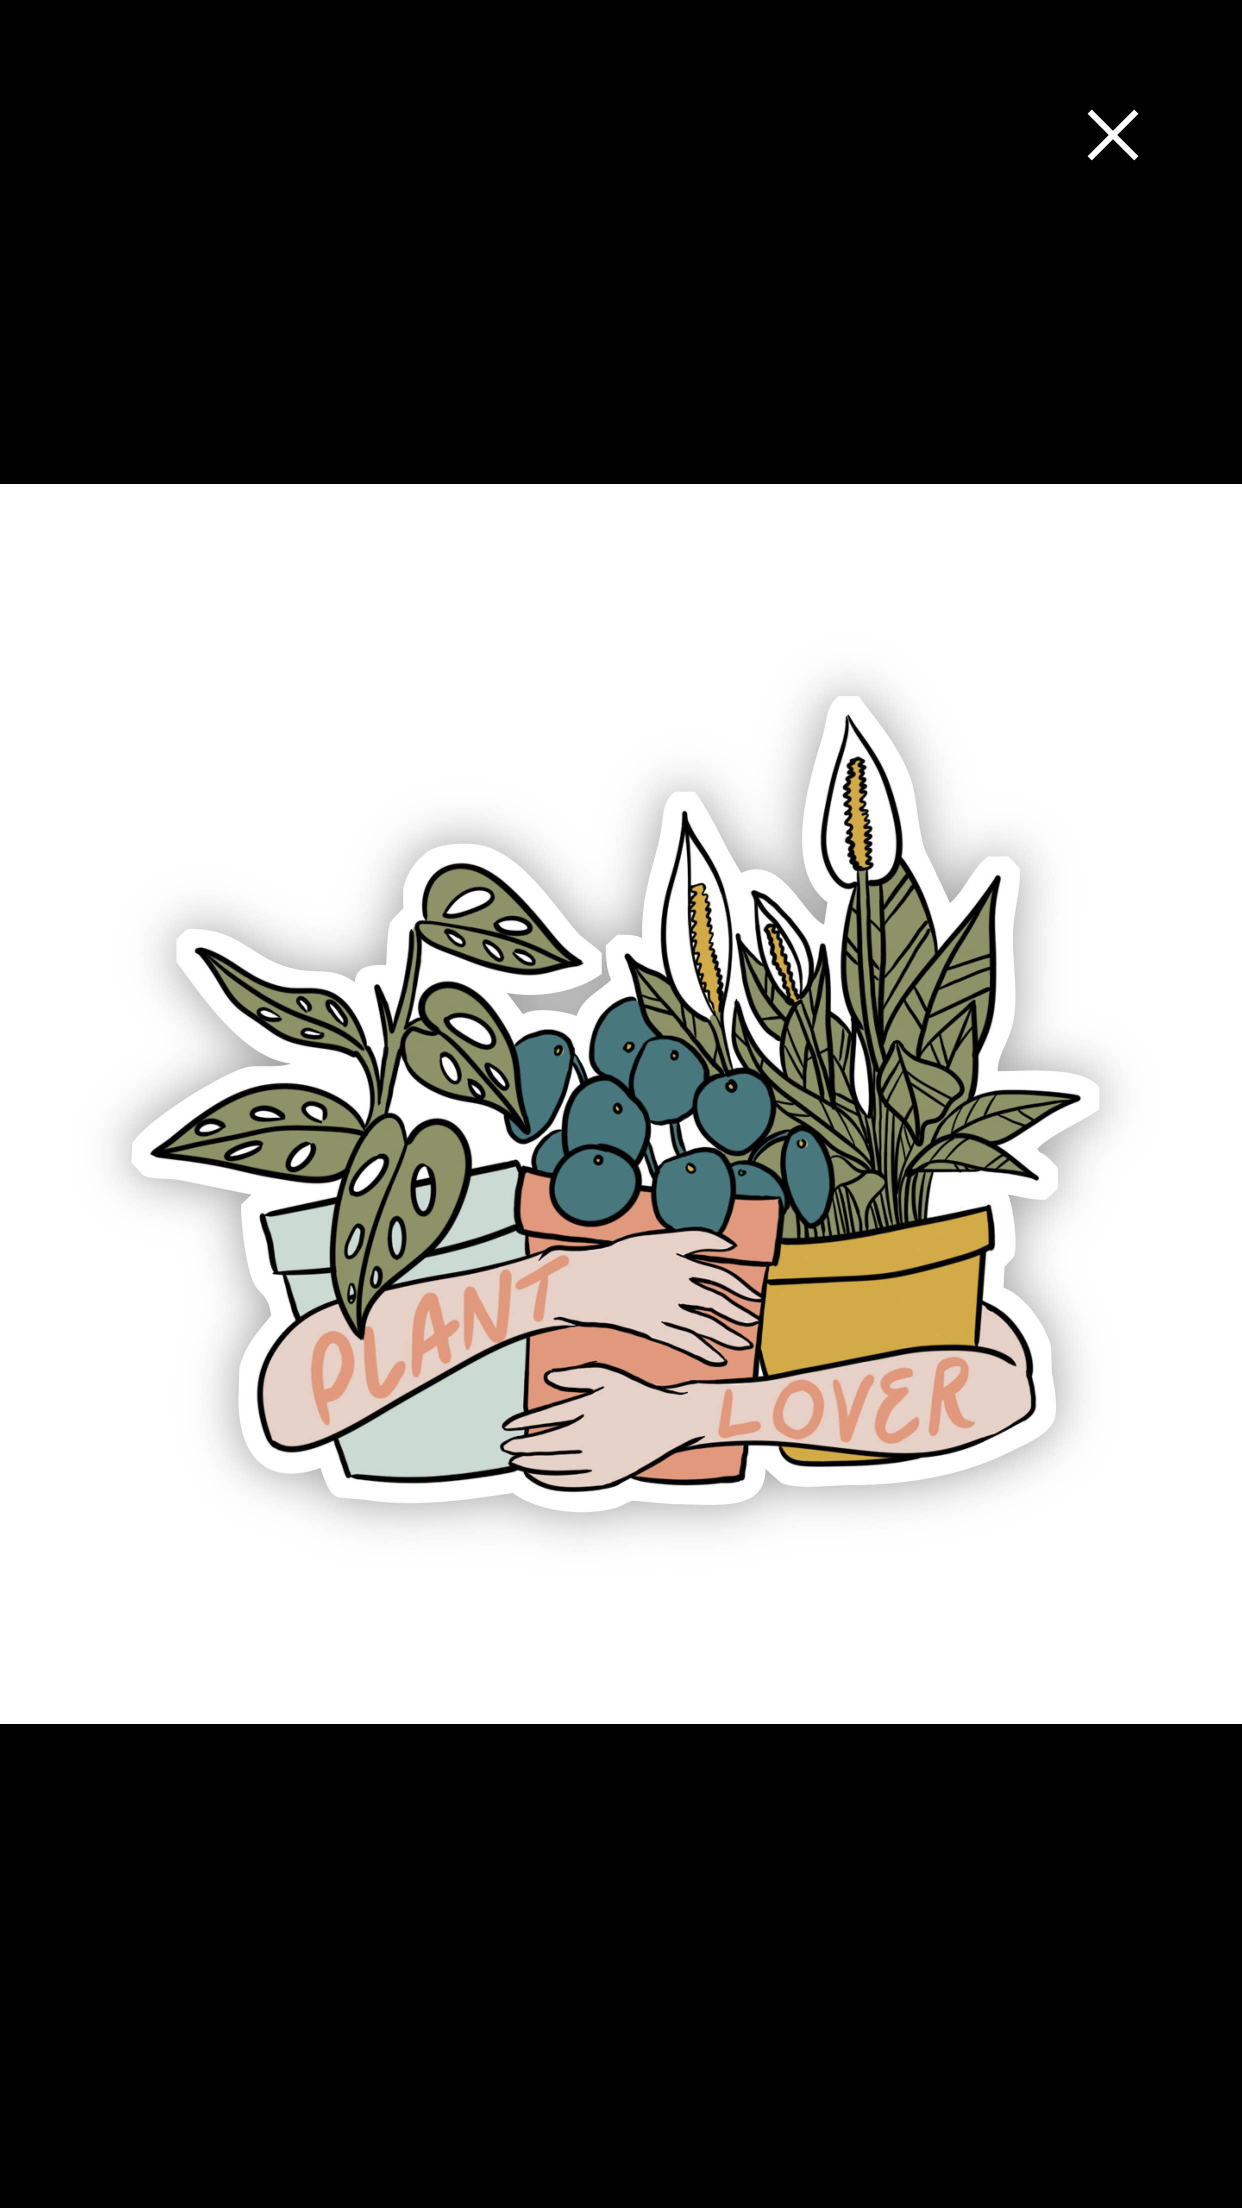 Plant Lover Vinyl Sticker